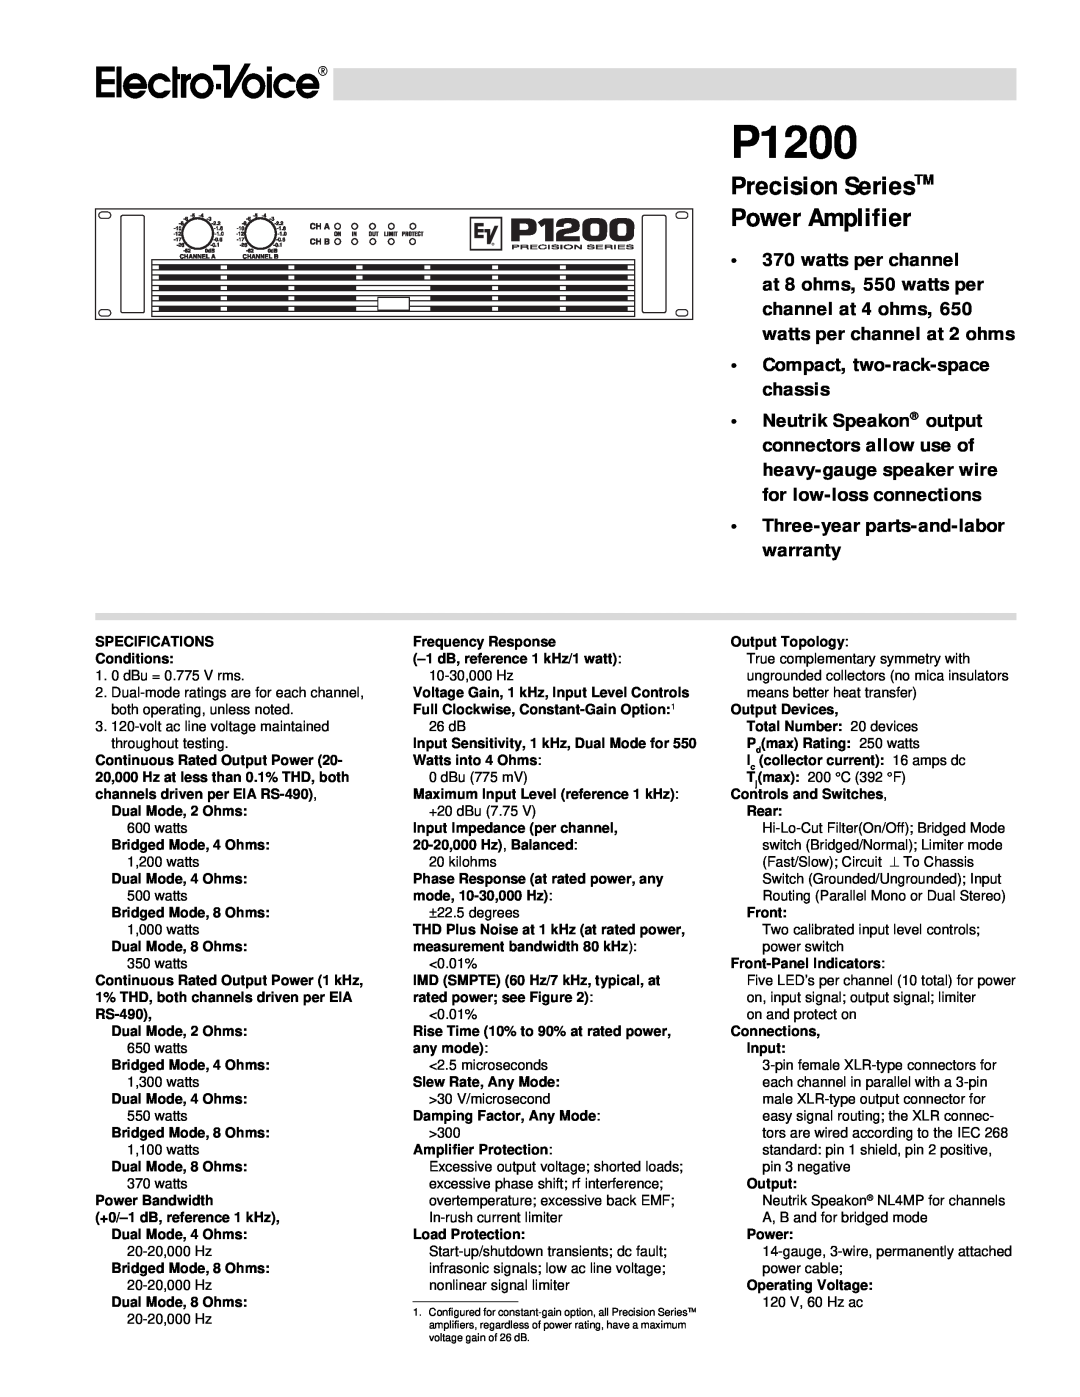 Electro-Voice P1200 warranty Precision SeriesTM Power Amplifier, Three-year parts-and-laborwarranty 